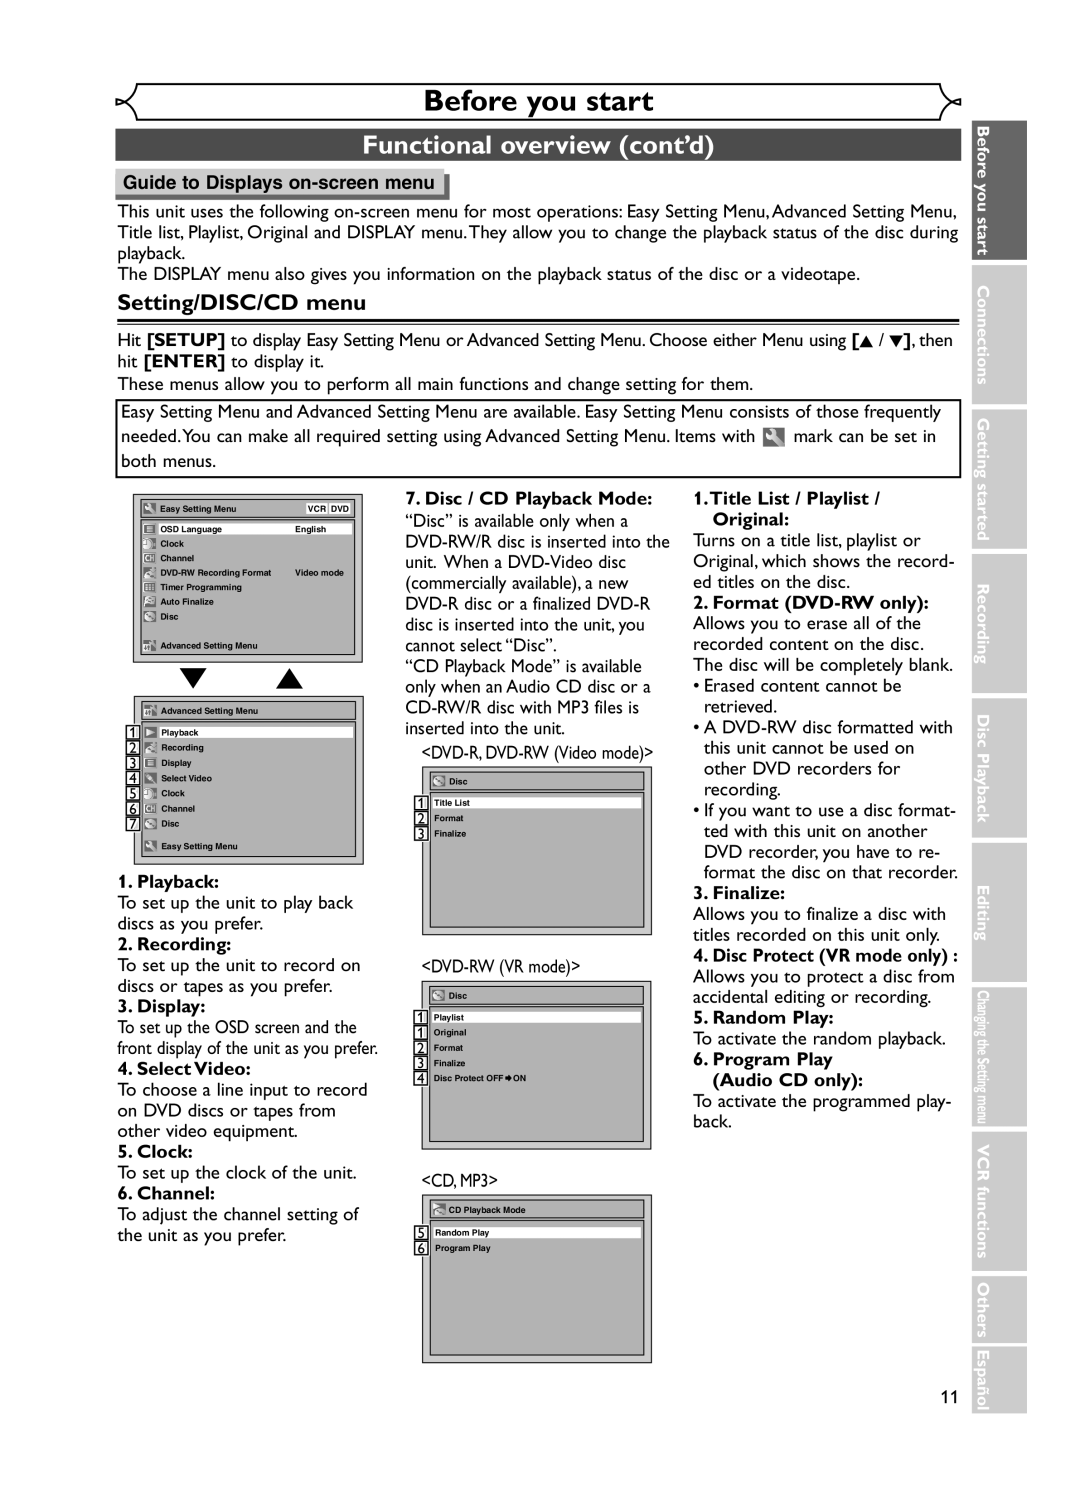 Emerson EWR20V5 Before you start, Setting/DISC/CD menu, Guide to Displays on-screen menu, Playback, Recording, Clock 